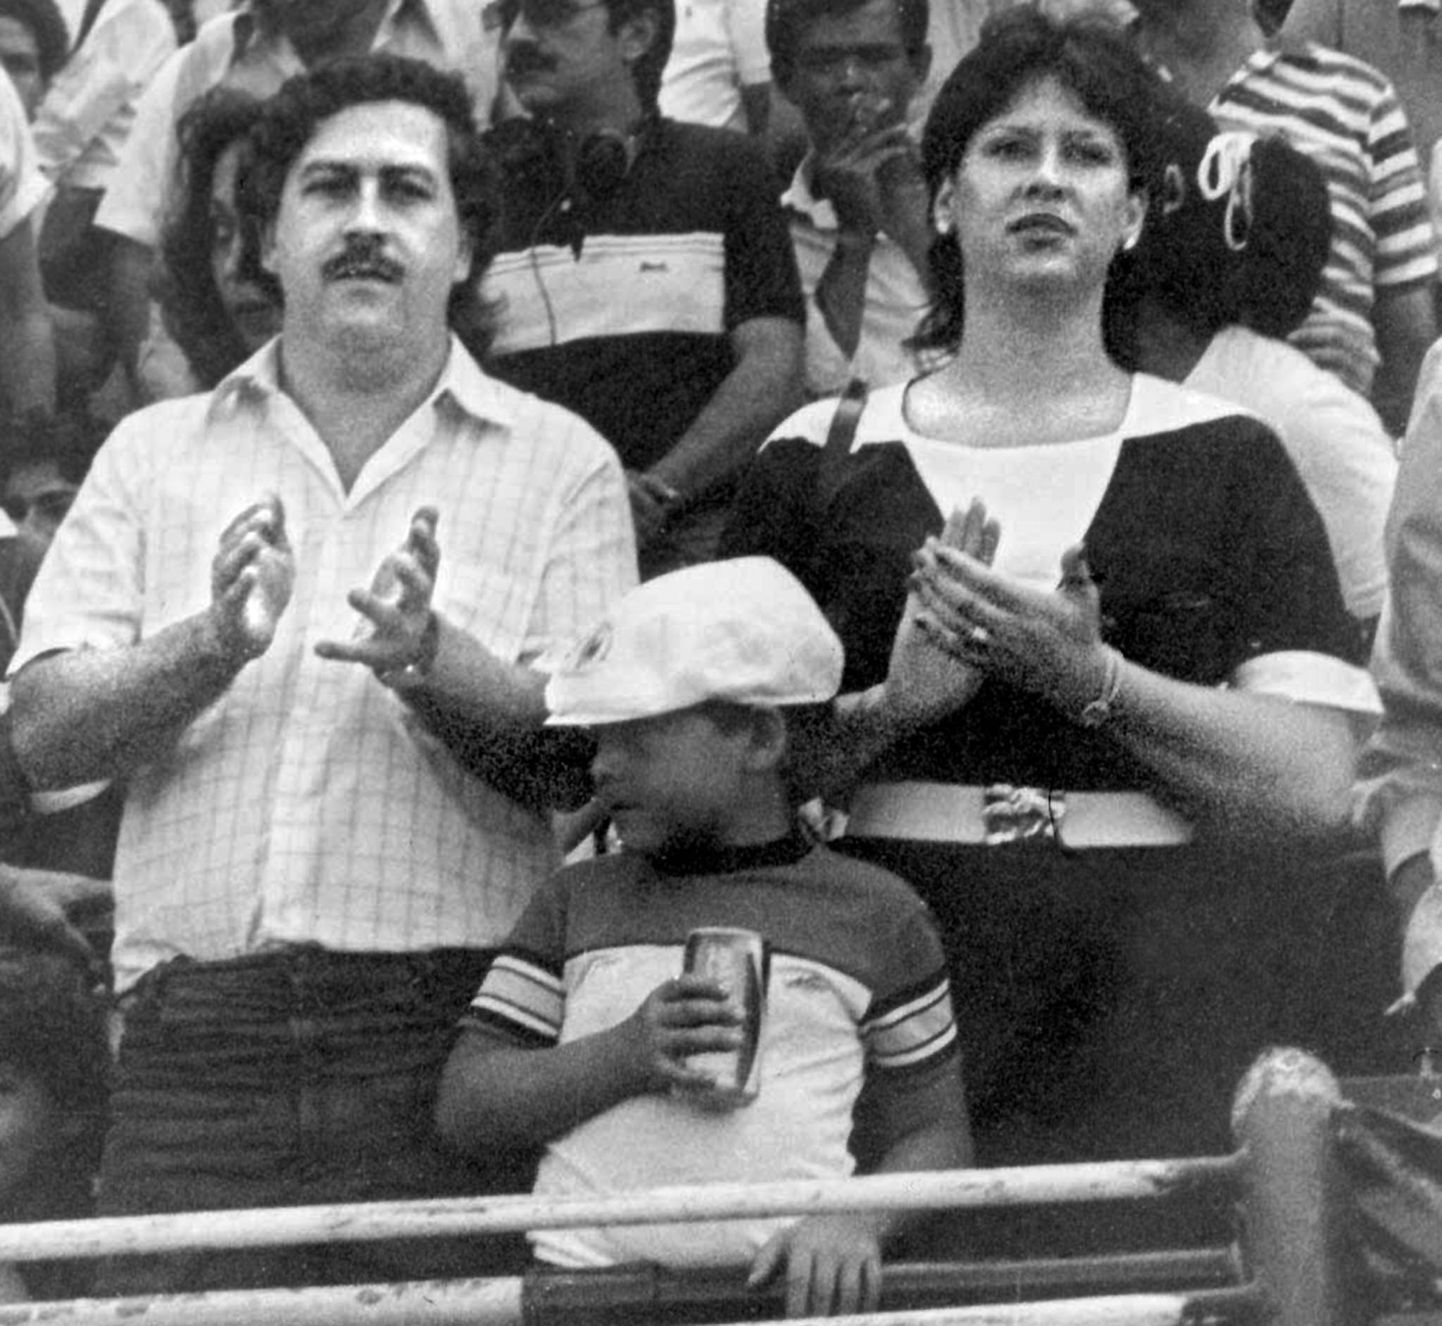 Fotol Pablo Escobar, tema naine Victoria Eugenia Henau ja poeg Pablo Escobar.